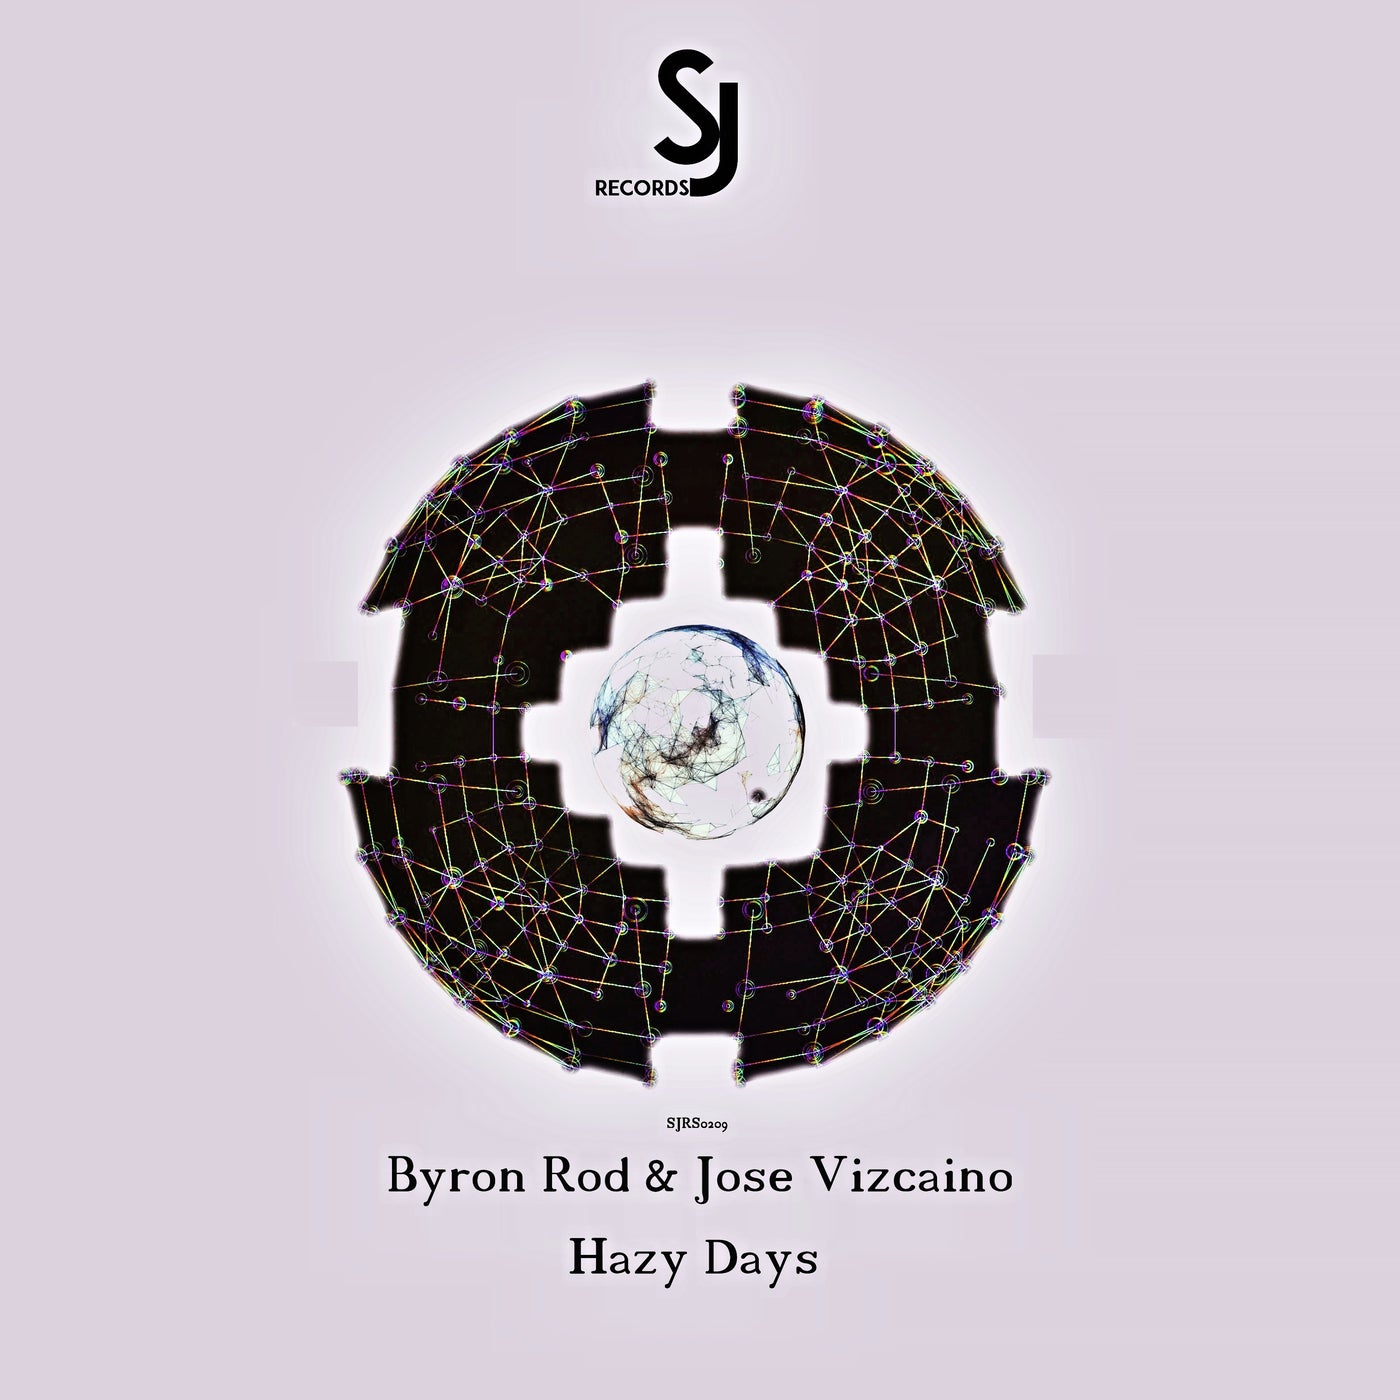 Hazy Days EP